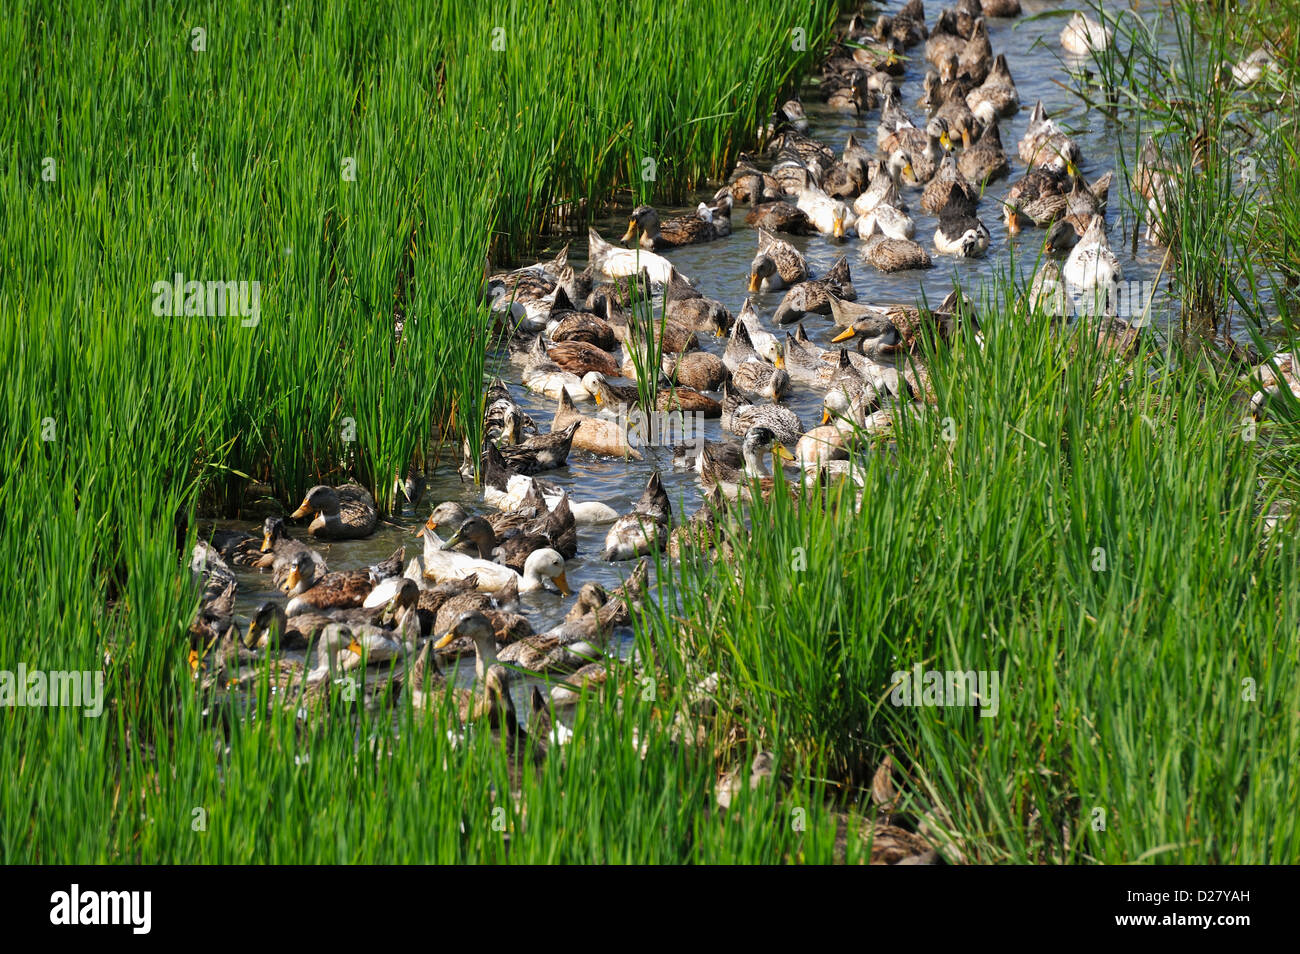 Flock of Ducks in rice field in Vietnam Stock Photo